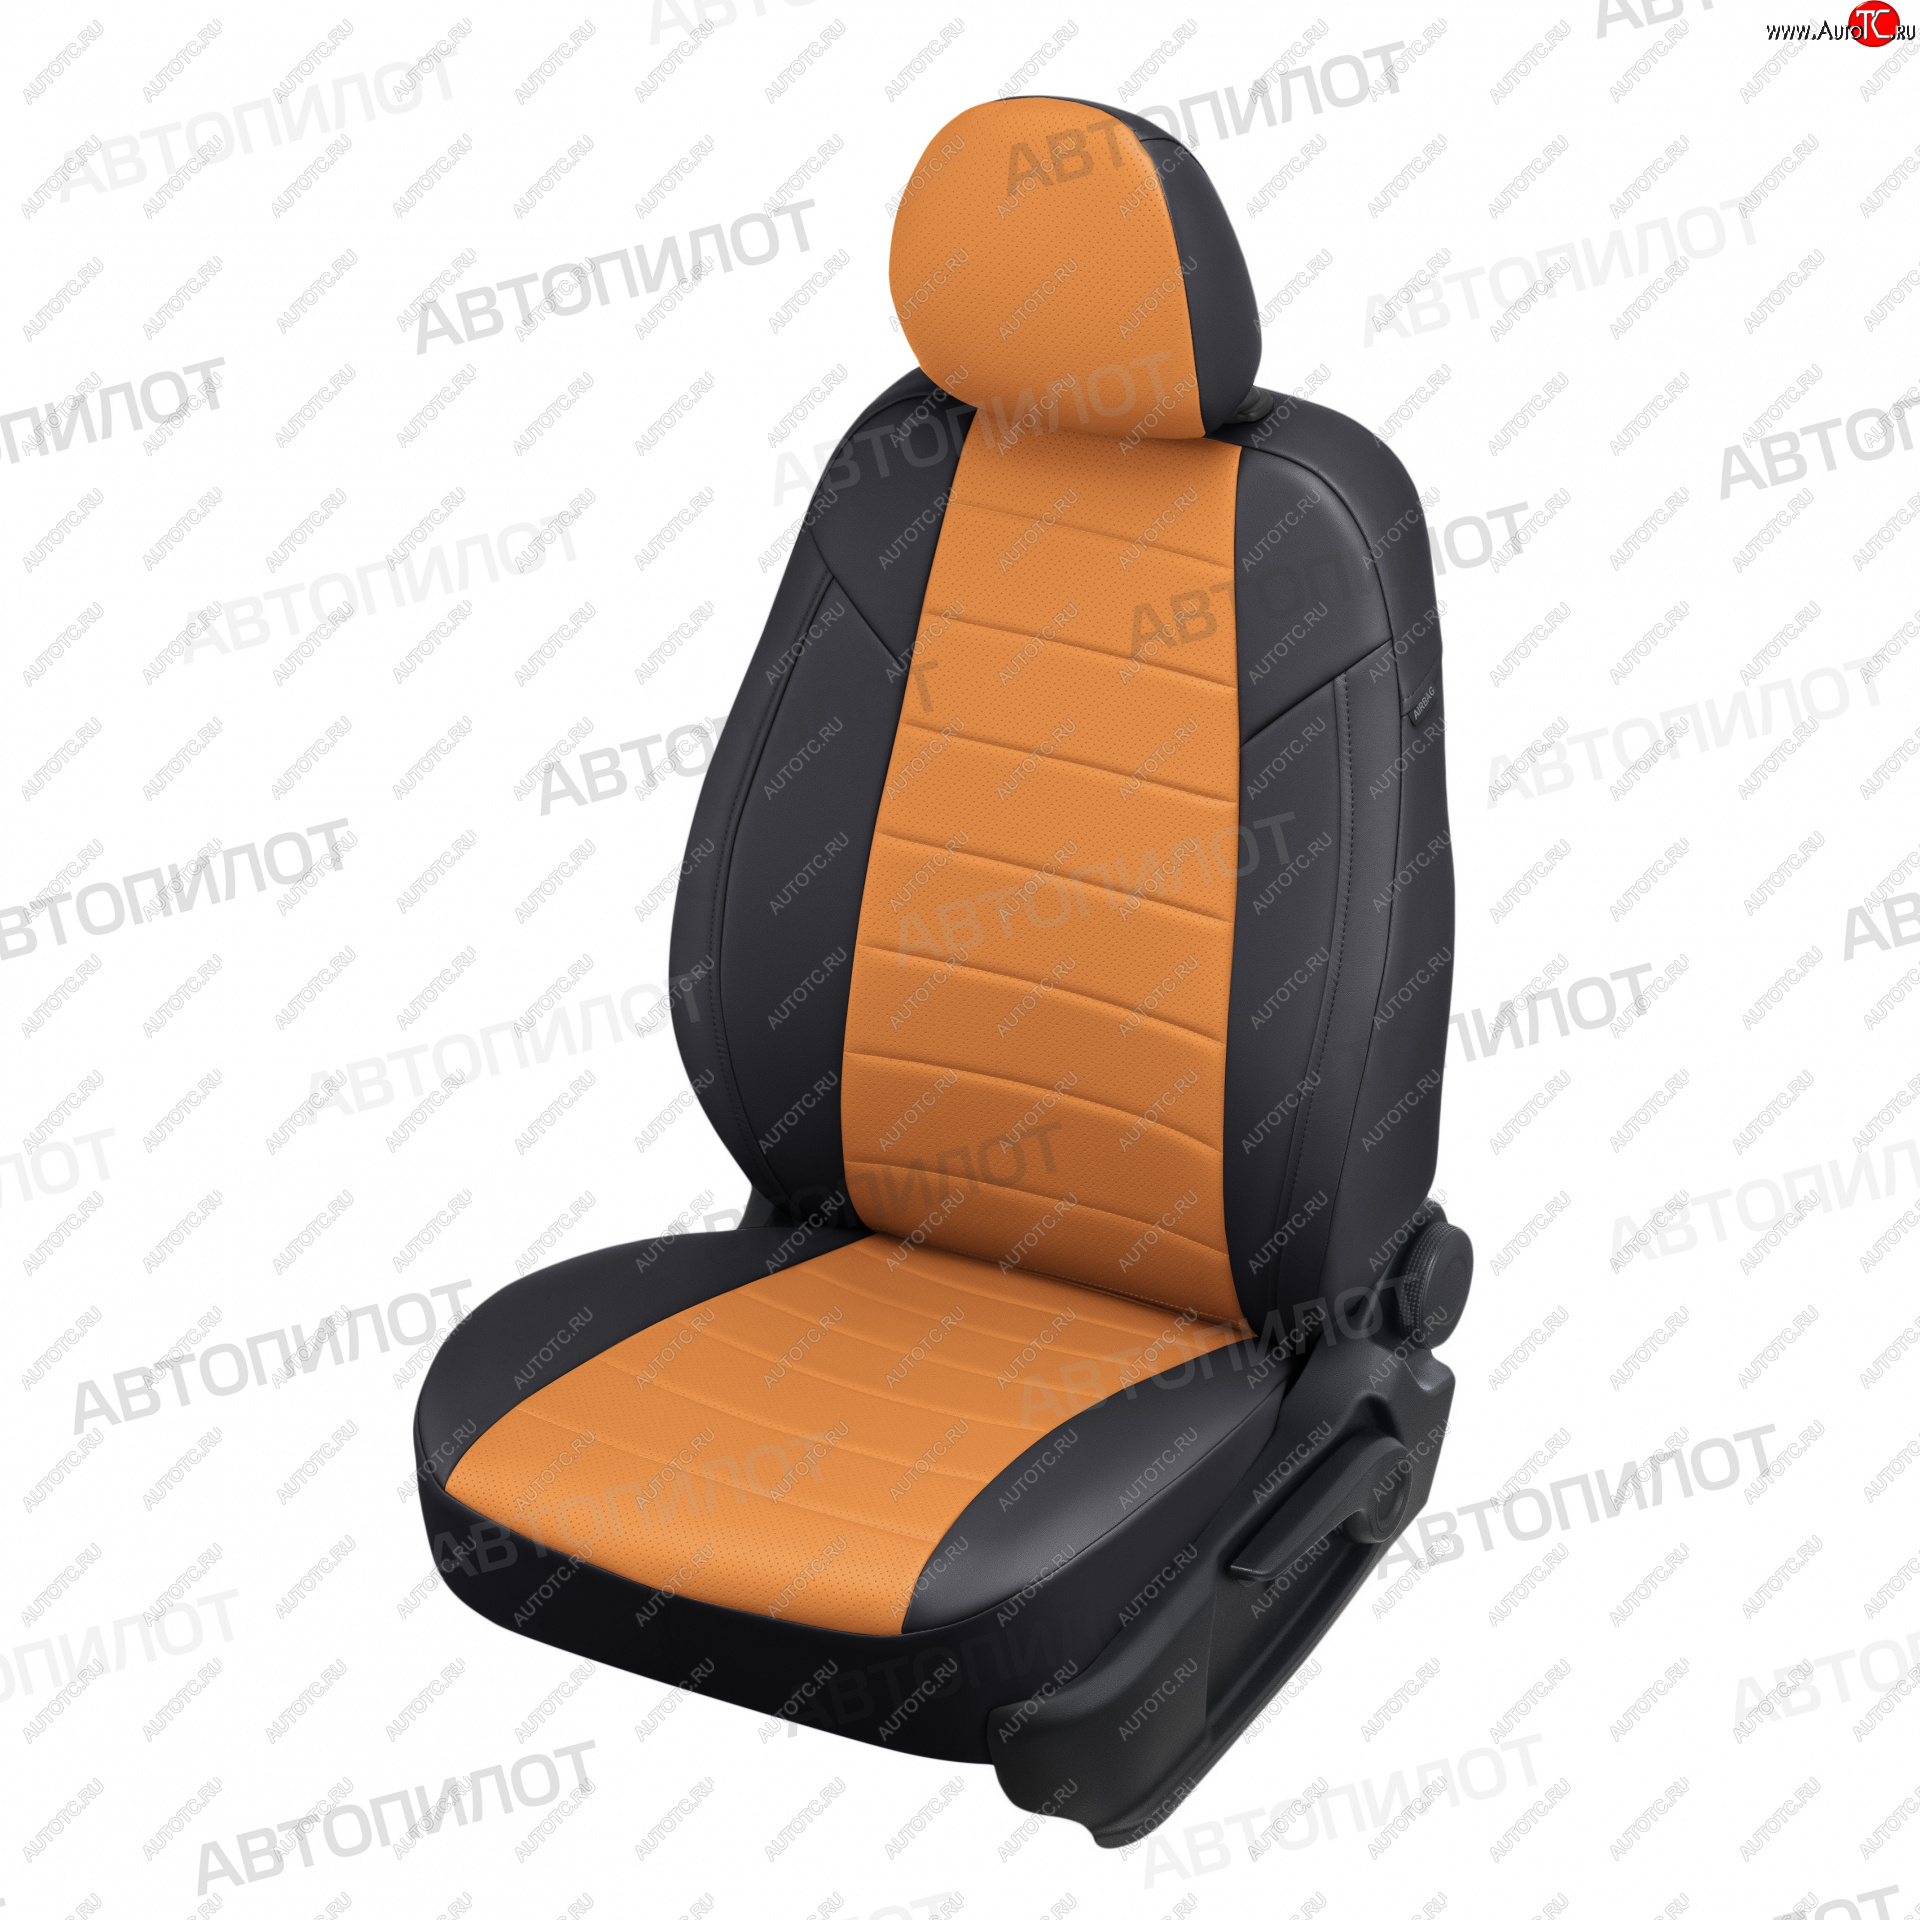 13 449 р. Чехлы сидений (экокожа) Автопилот  KIA Picanto  1 SA хэтчбэк 5 дв. (2003-2011) (черный/оранж)